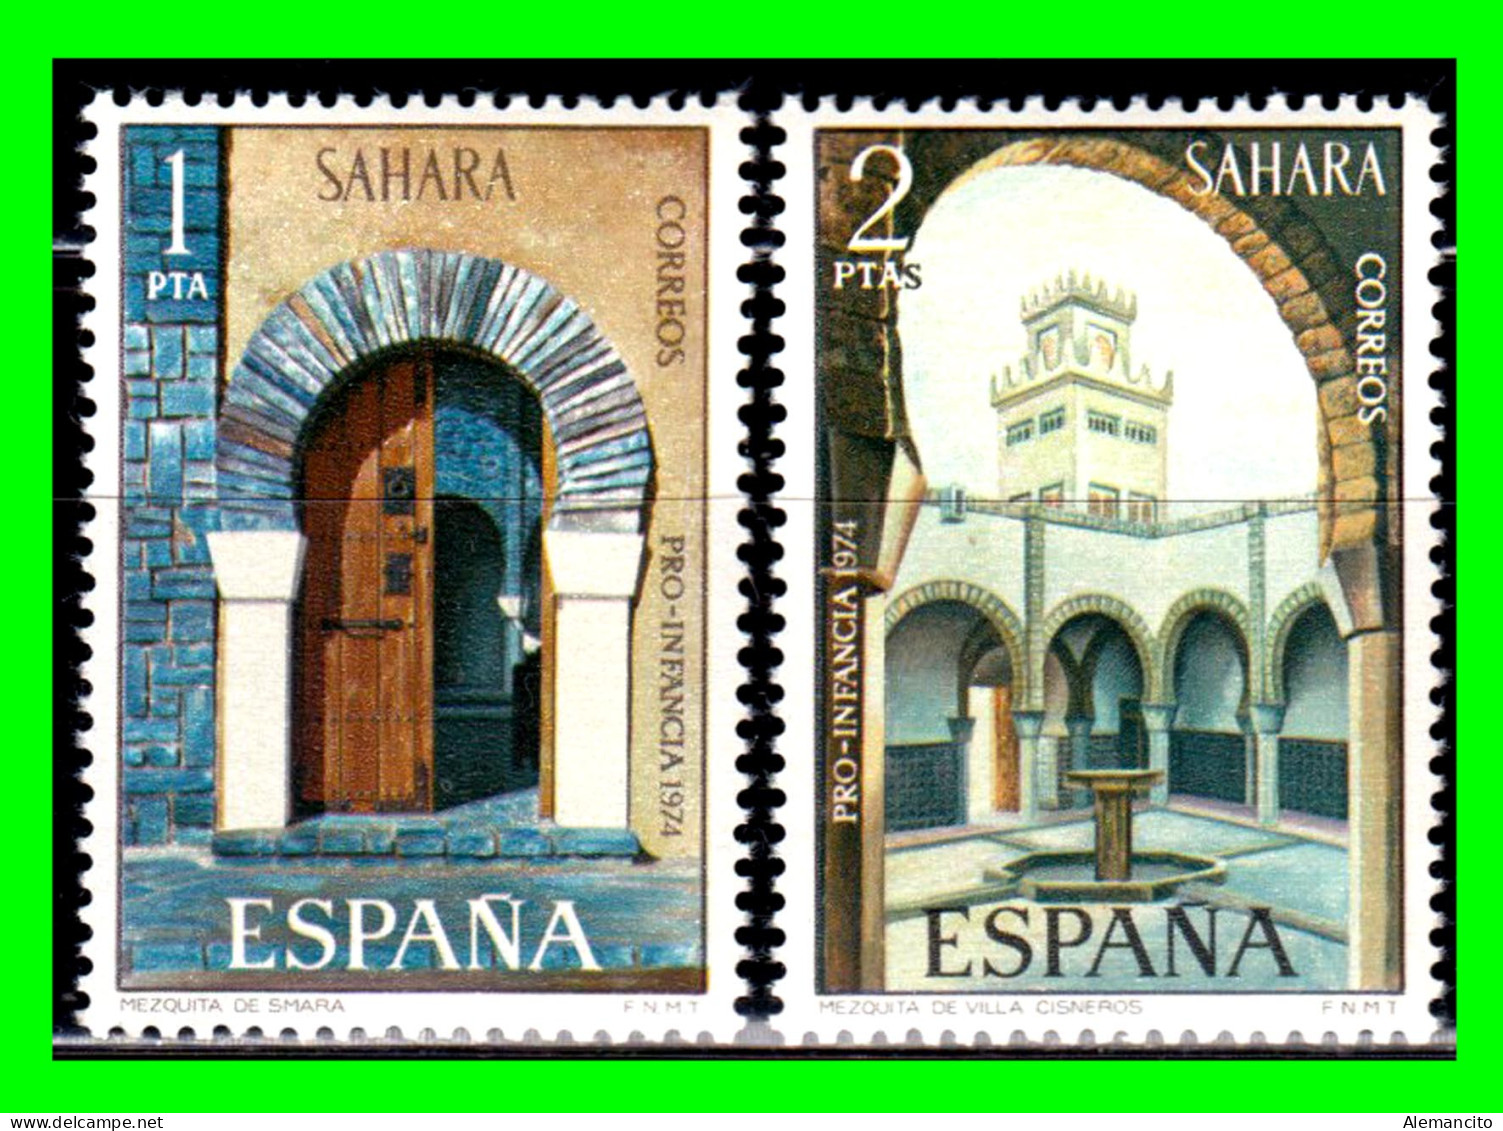 ESPAÑA COLONIAS ESPAÑOLAS ( SAHARA ESPAÑOL AFRICA ) SERIE DE SELLOS AÑO 1974 - PRO INFANCIA MEZQUITAS - NUEVOS - - Sahara Español